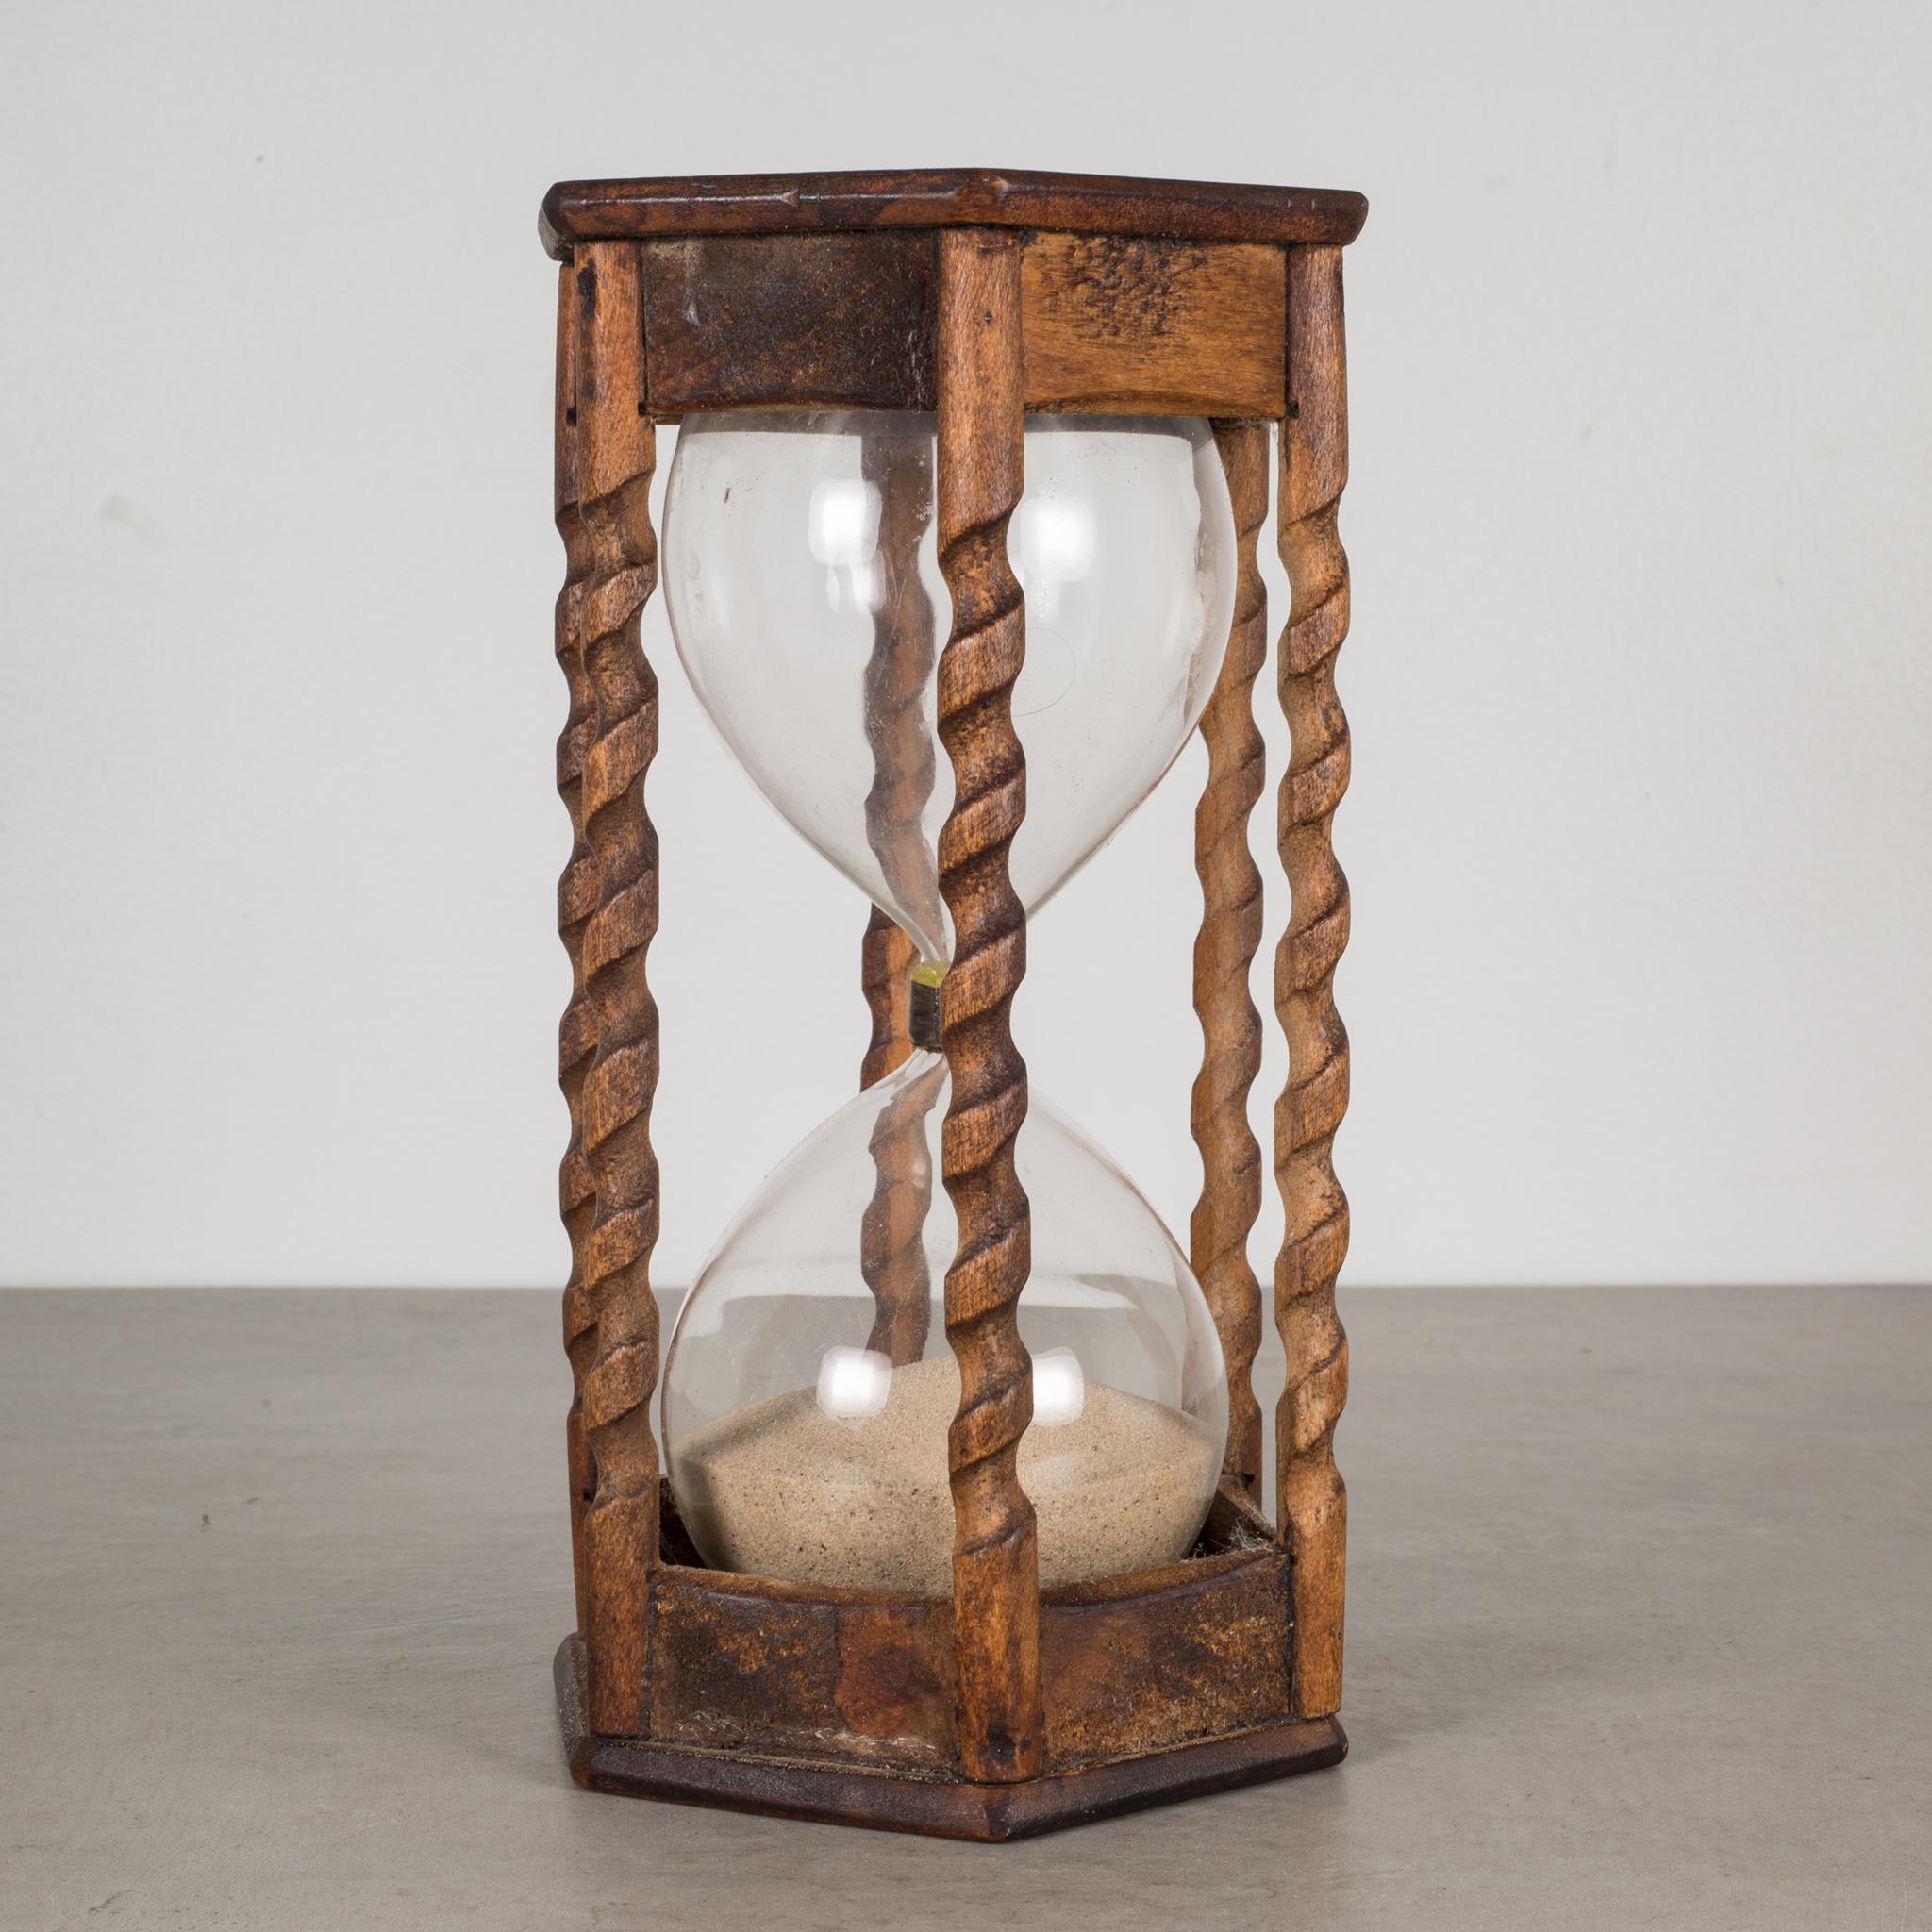 Rustic Vintage Spiral Wood Hourglass, circa 1940-1960